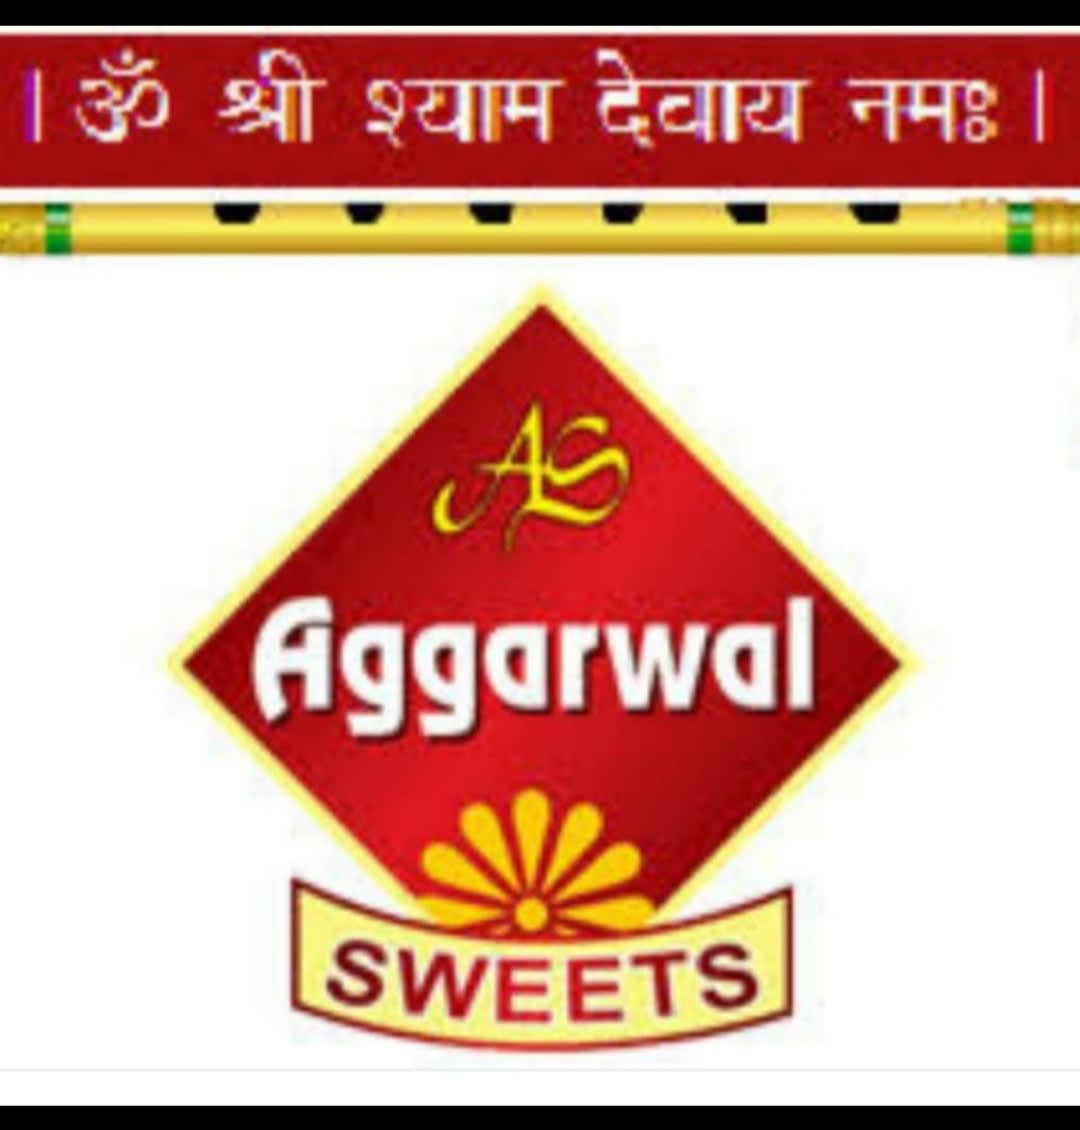 Aggarwal sweets